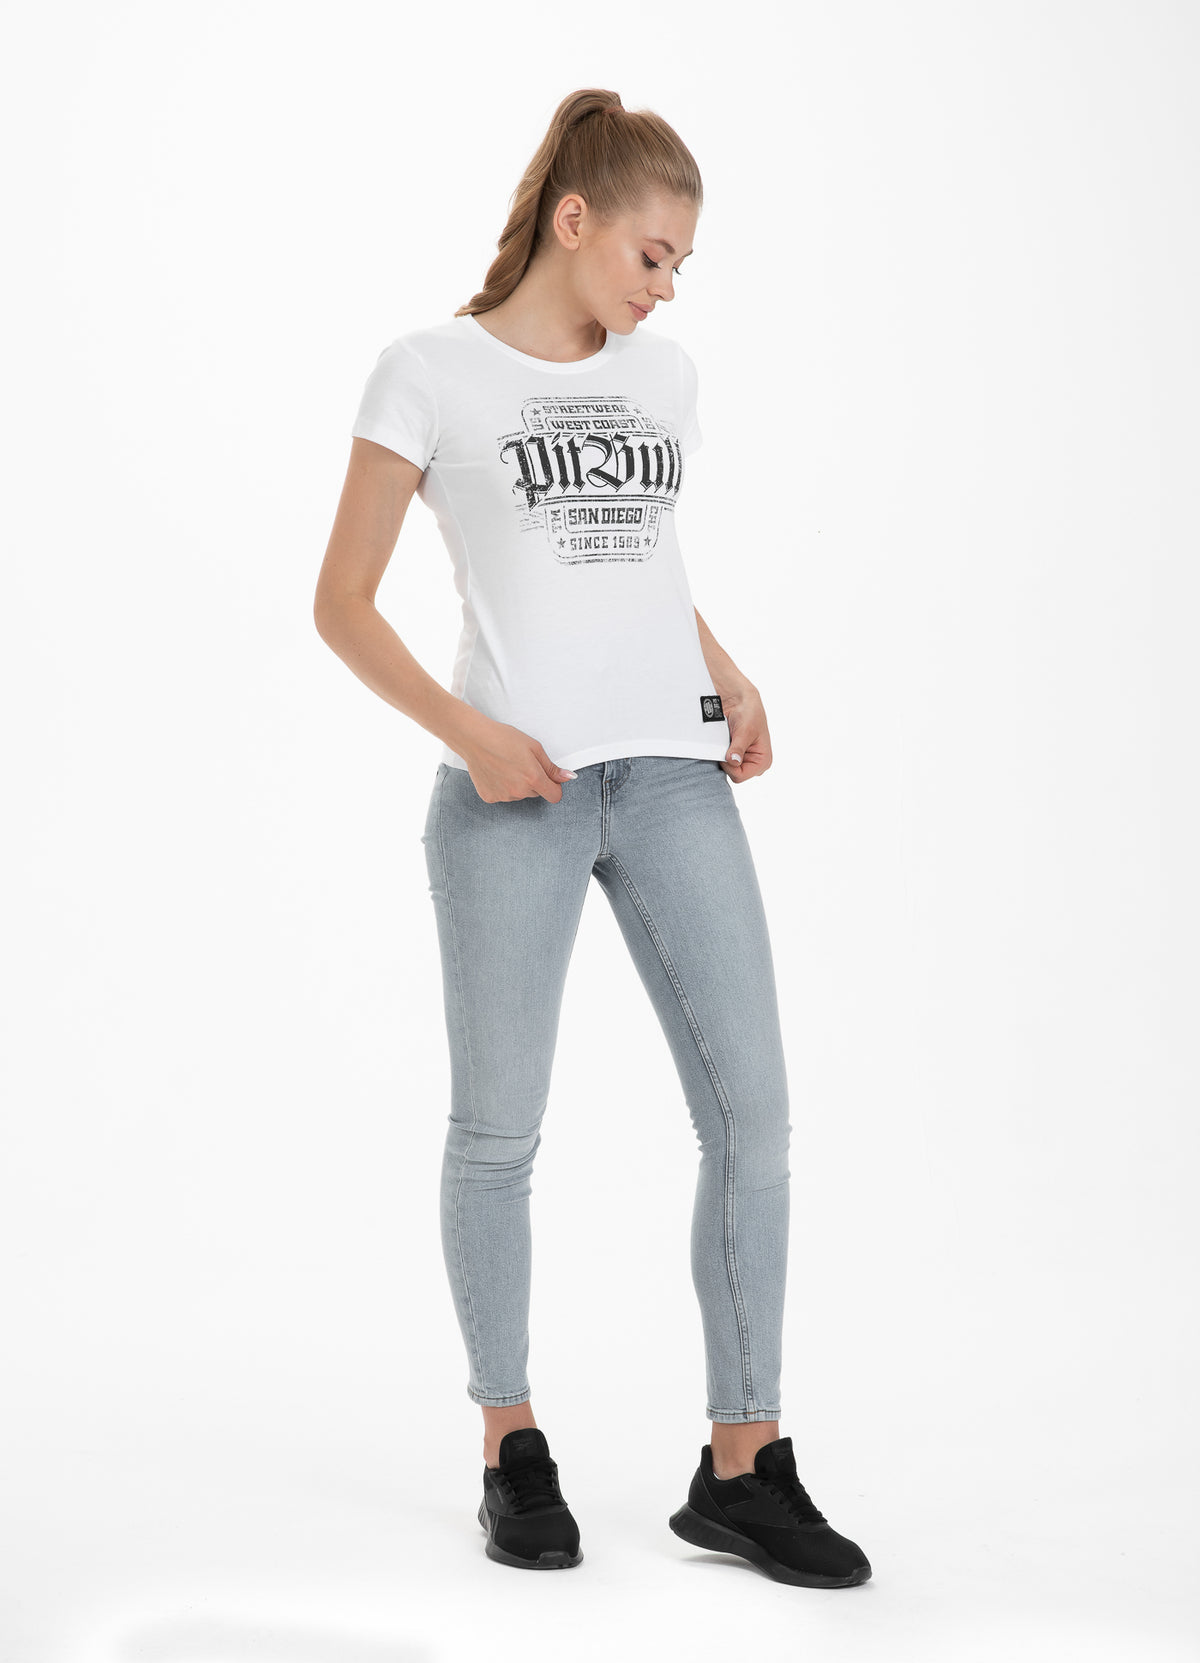 Women's T-shirt San Diego IV White - Pitbull West Coast International Store 